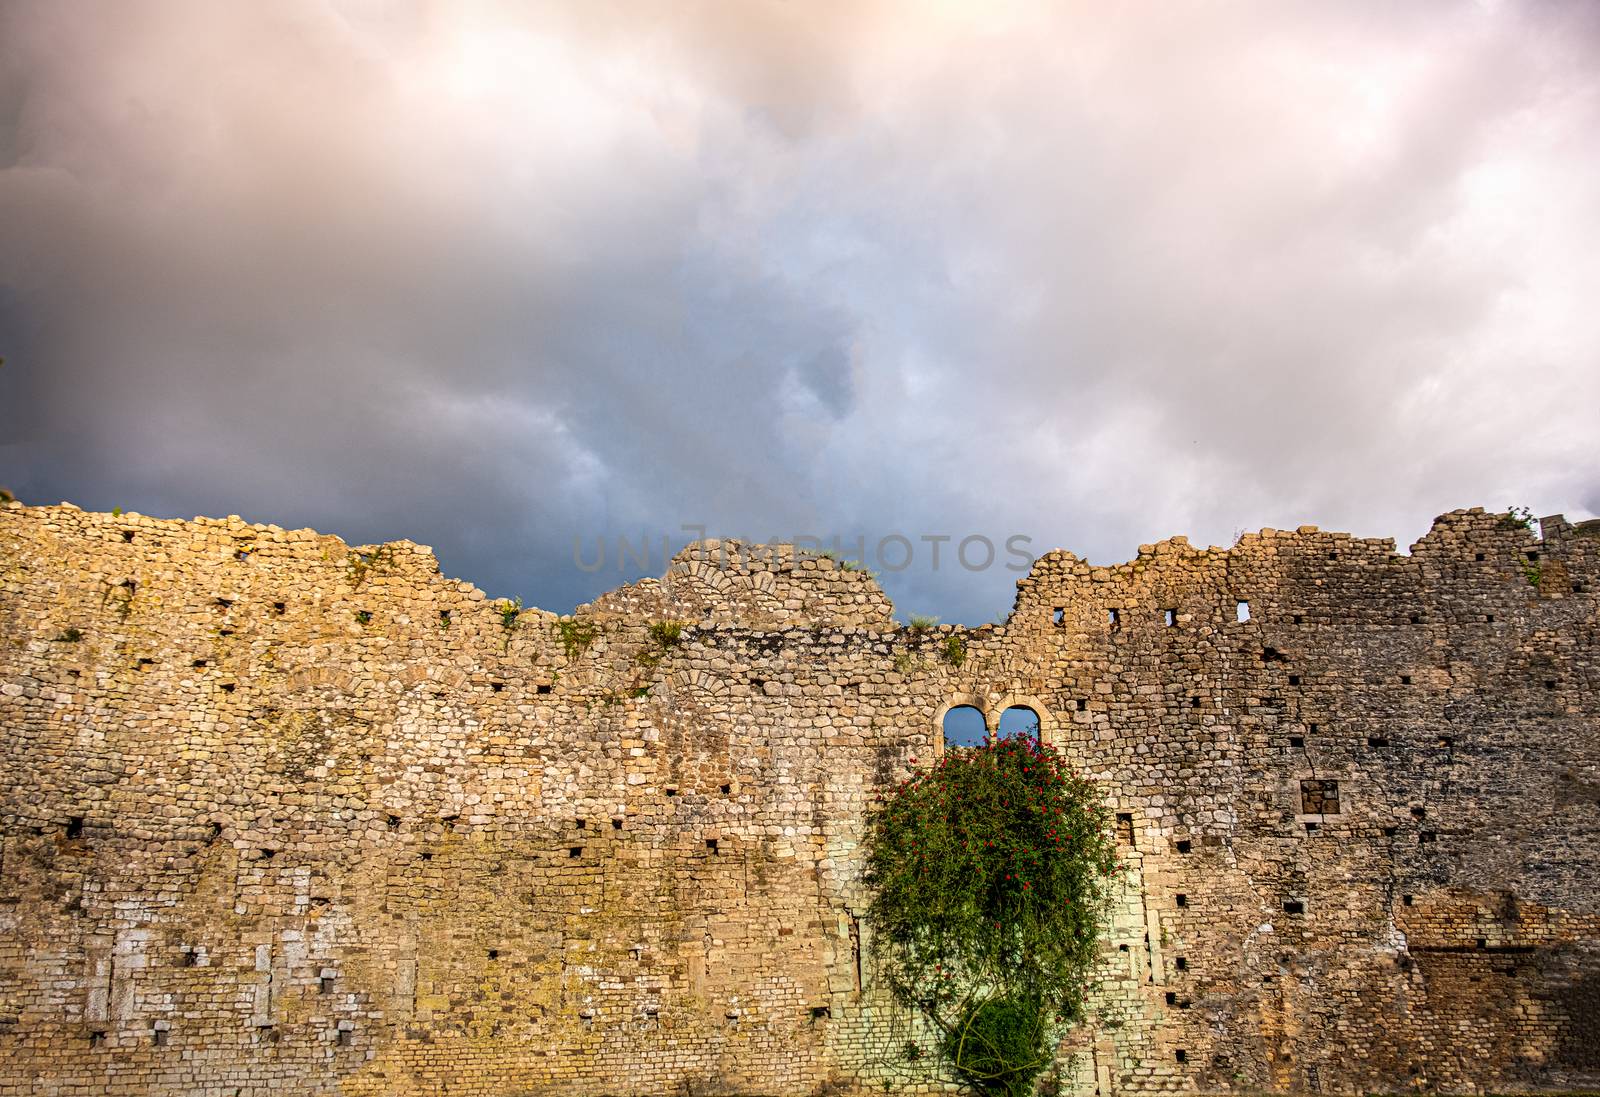 damaged castle wall background ruins sky backdrop storm clouds windows ivy plant flowers copyspace .